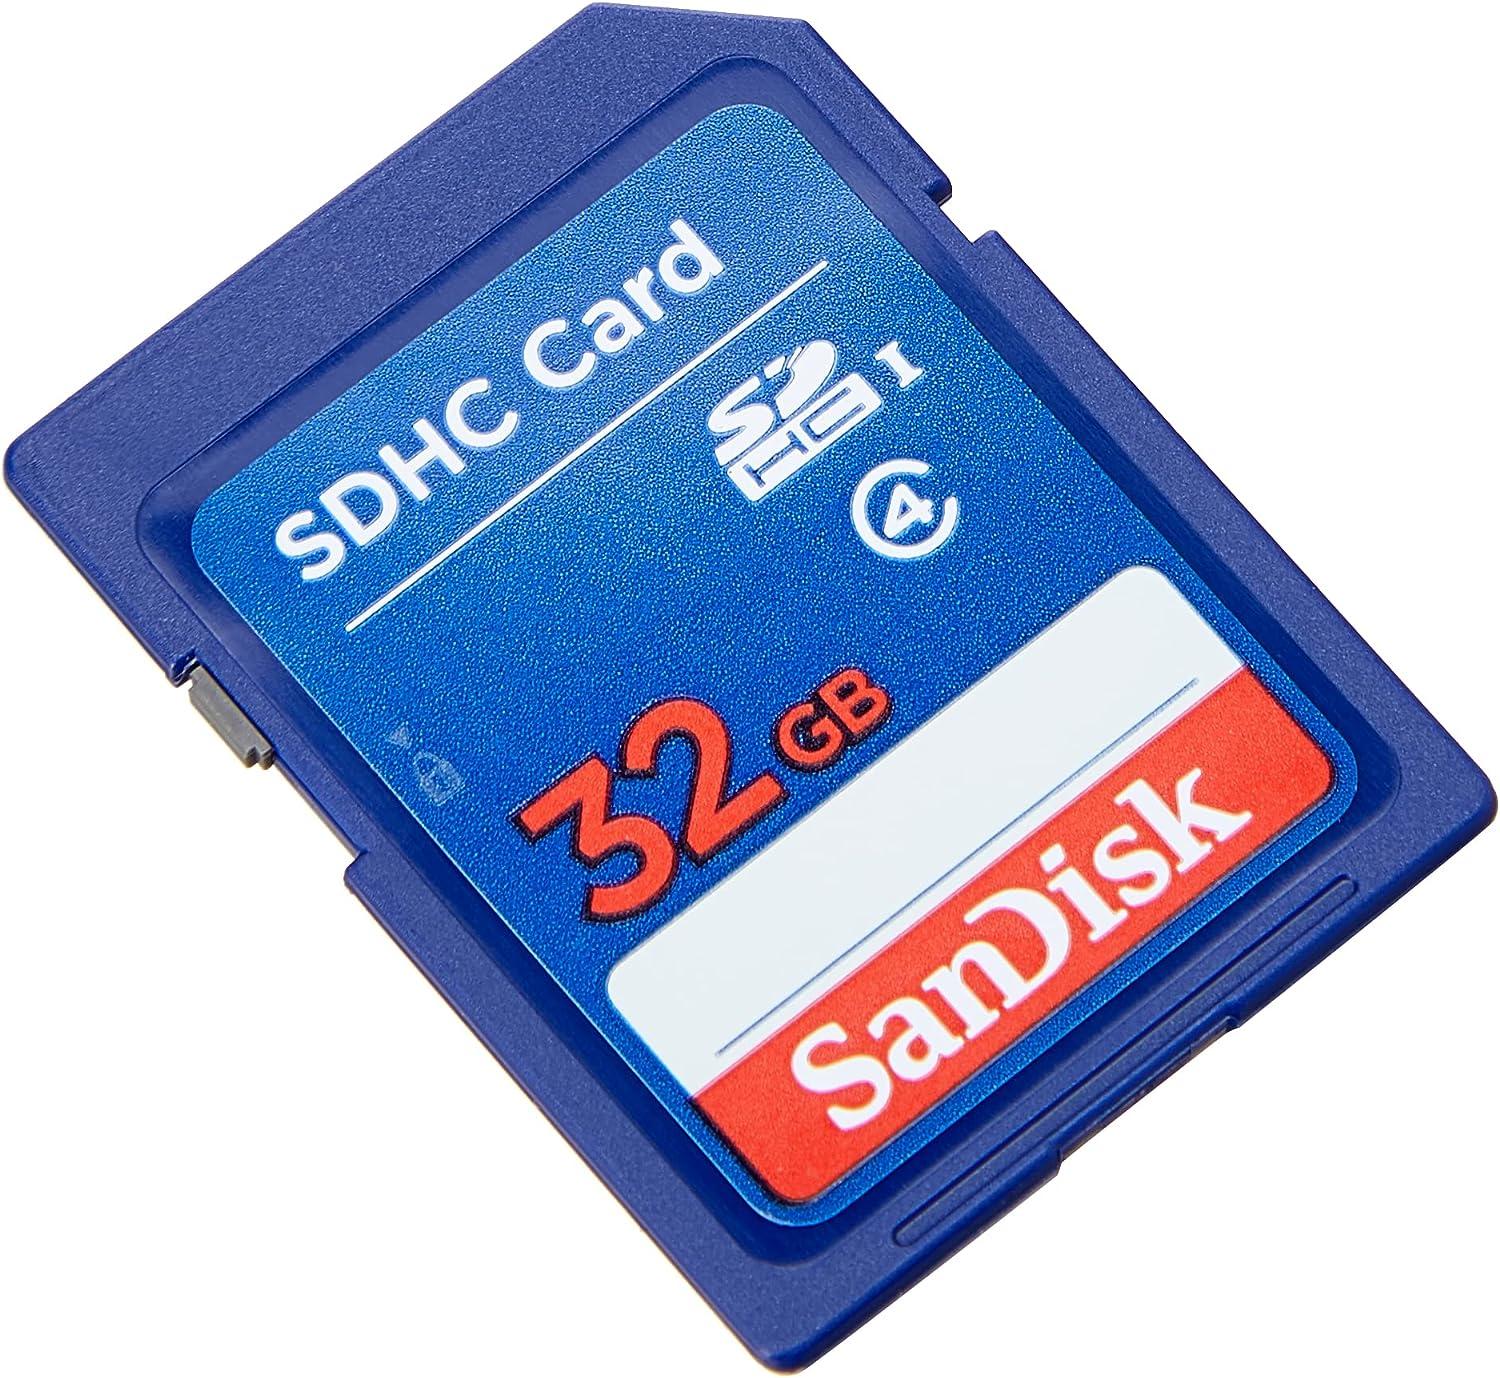 Mgm - SanDisk SDSDB-032G-B35 Carte mémoire SDHC classe 4 32 Go